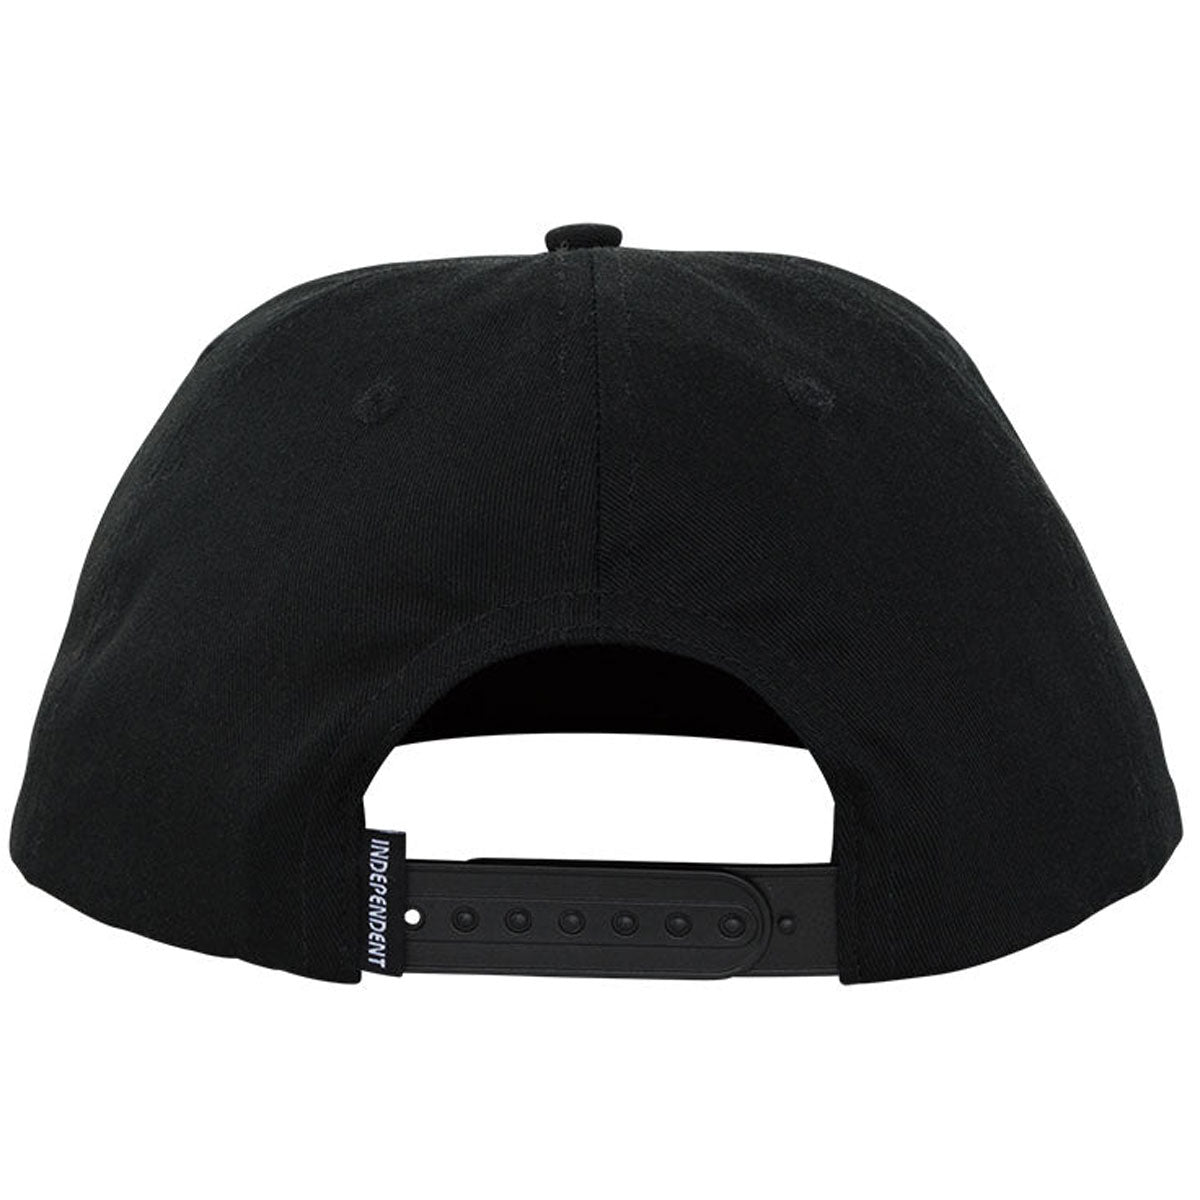 Independent B/C Groundwork Snapback Hat - Black image 2